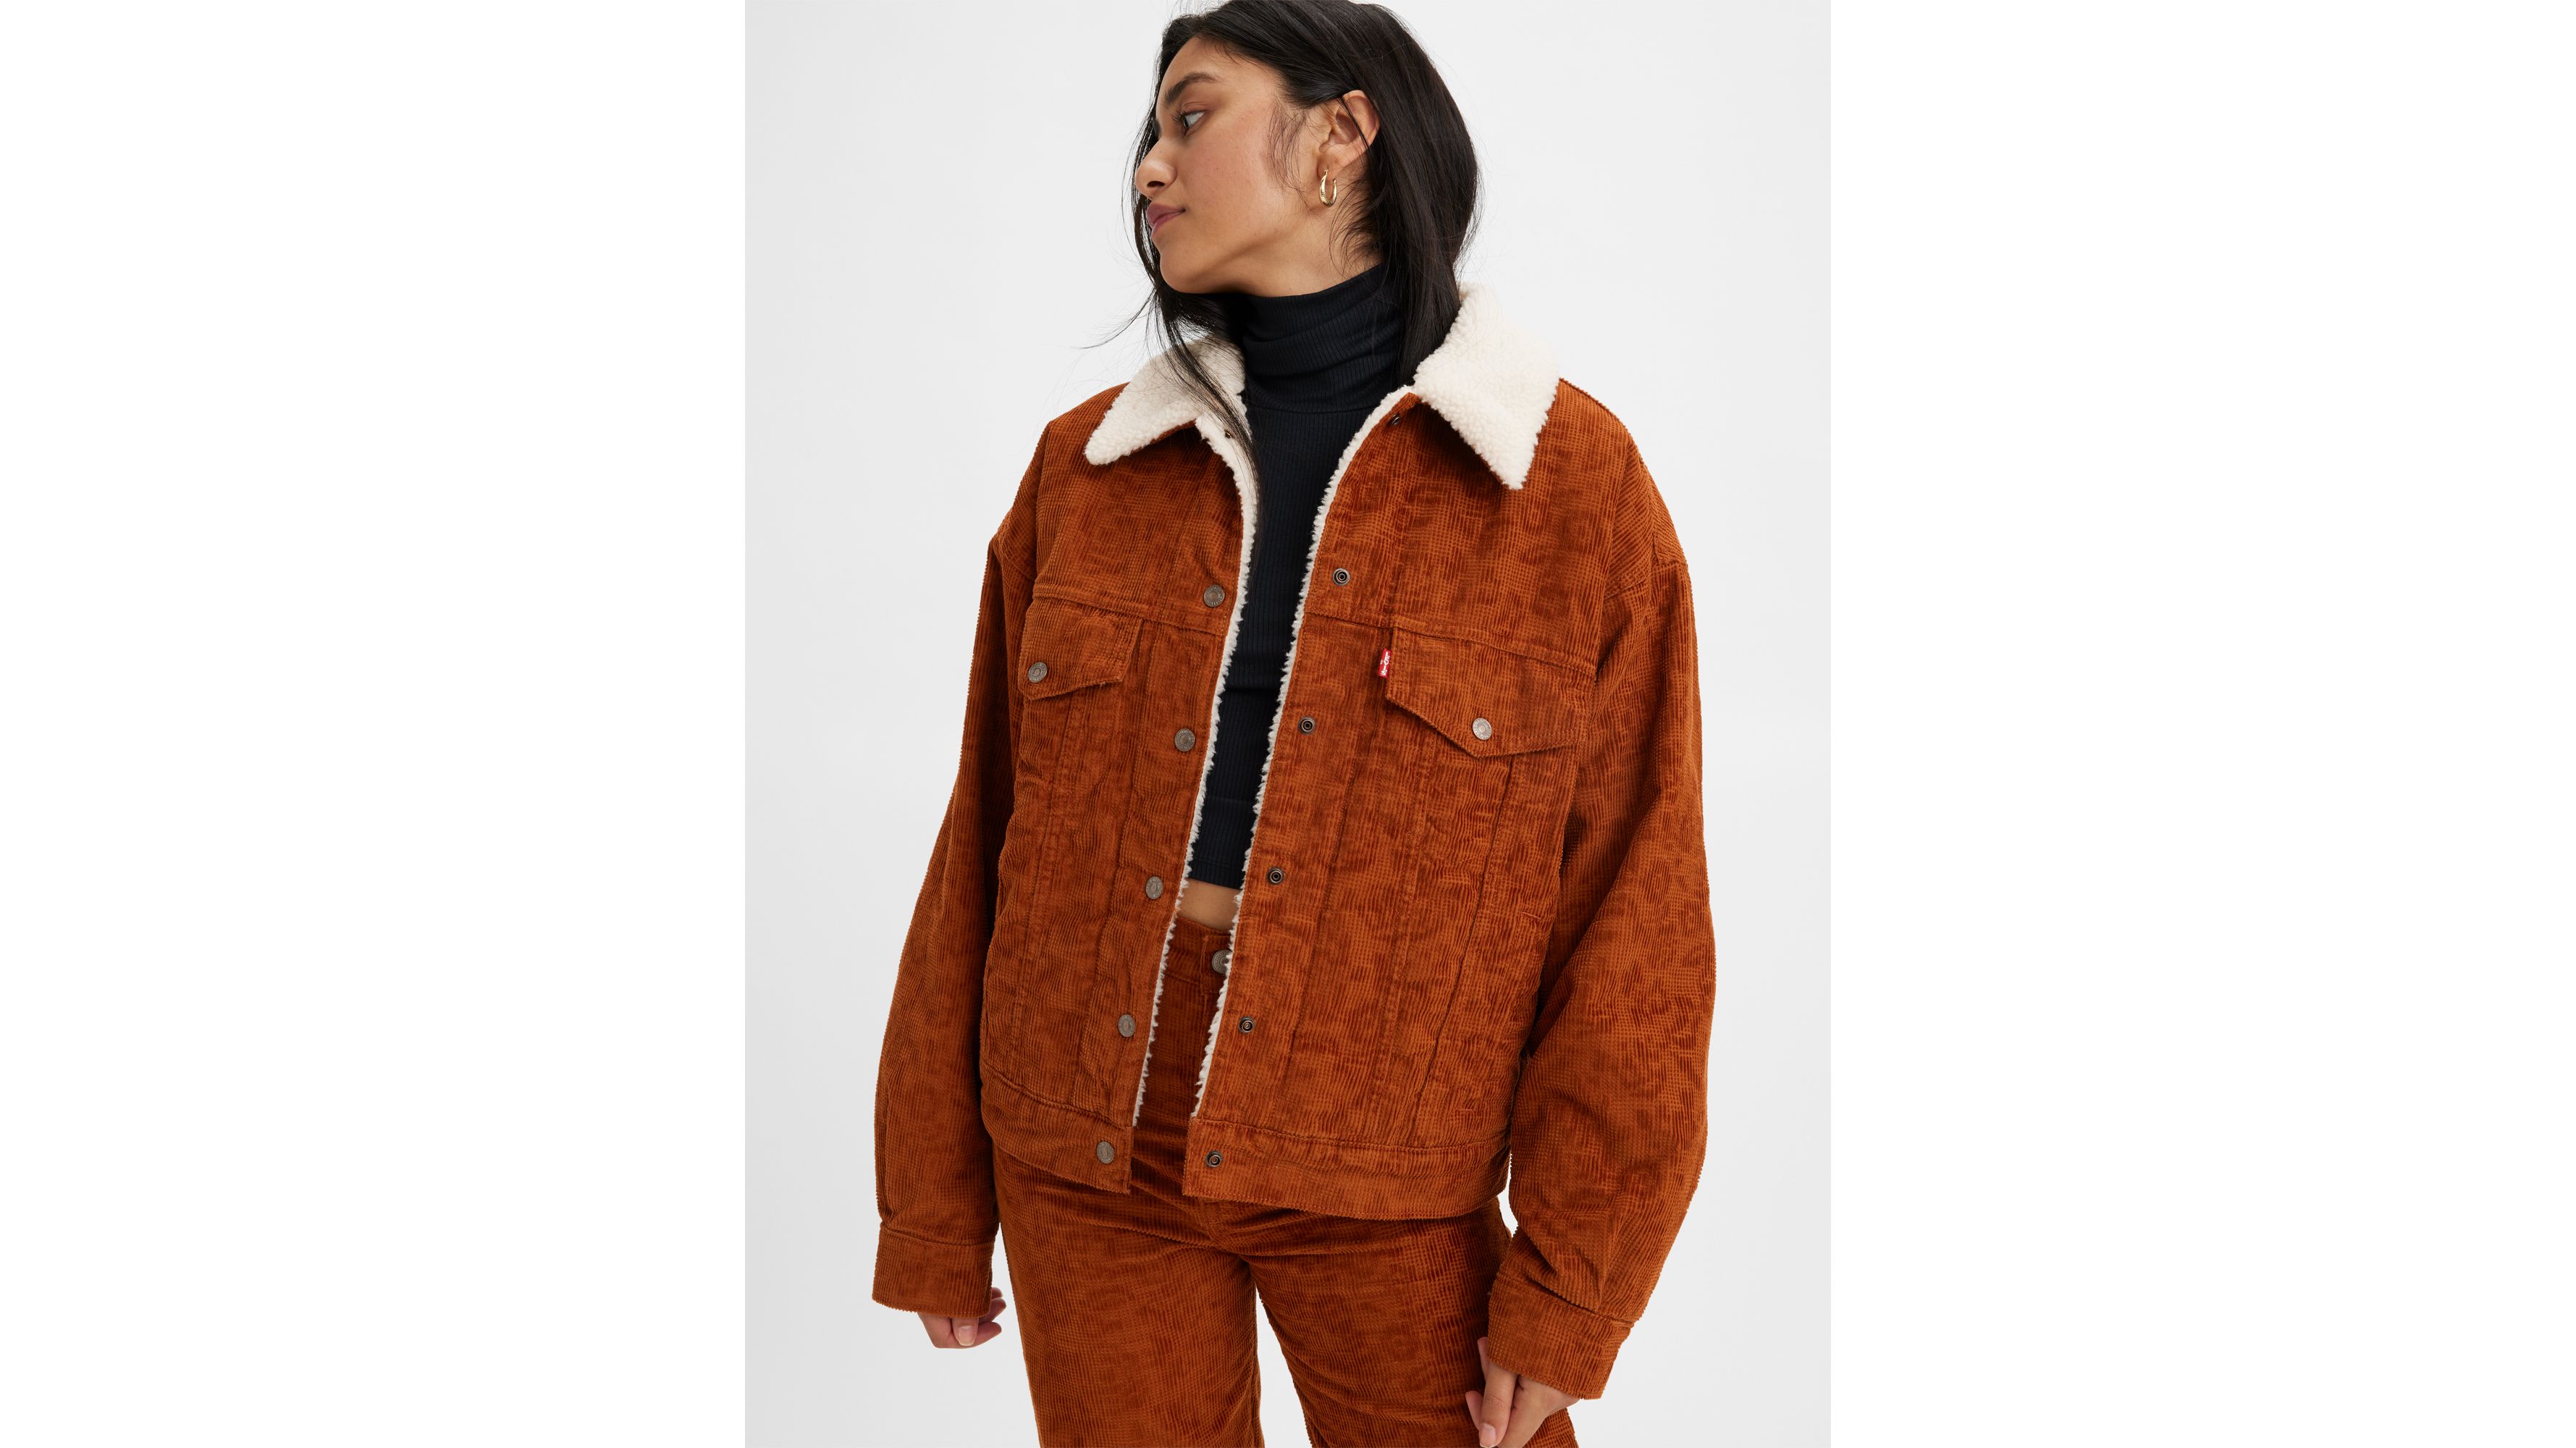 Vintage Orange Tab Levis Jean Jacket Selected by Anna Corinna